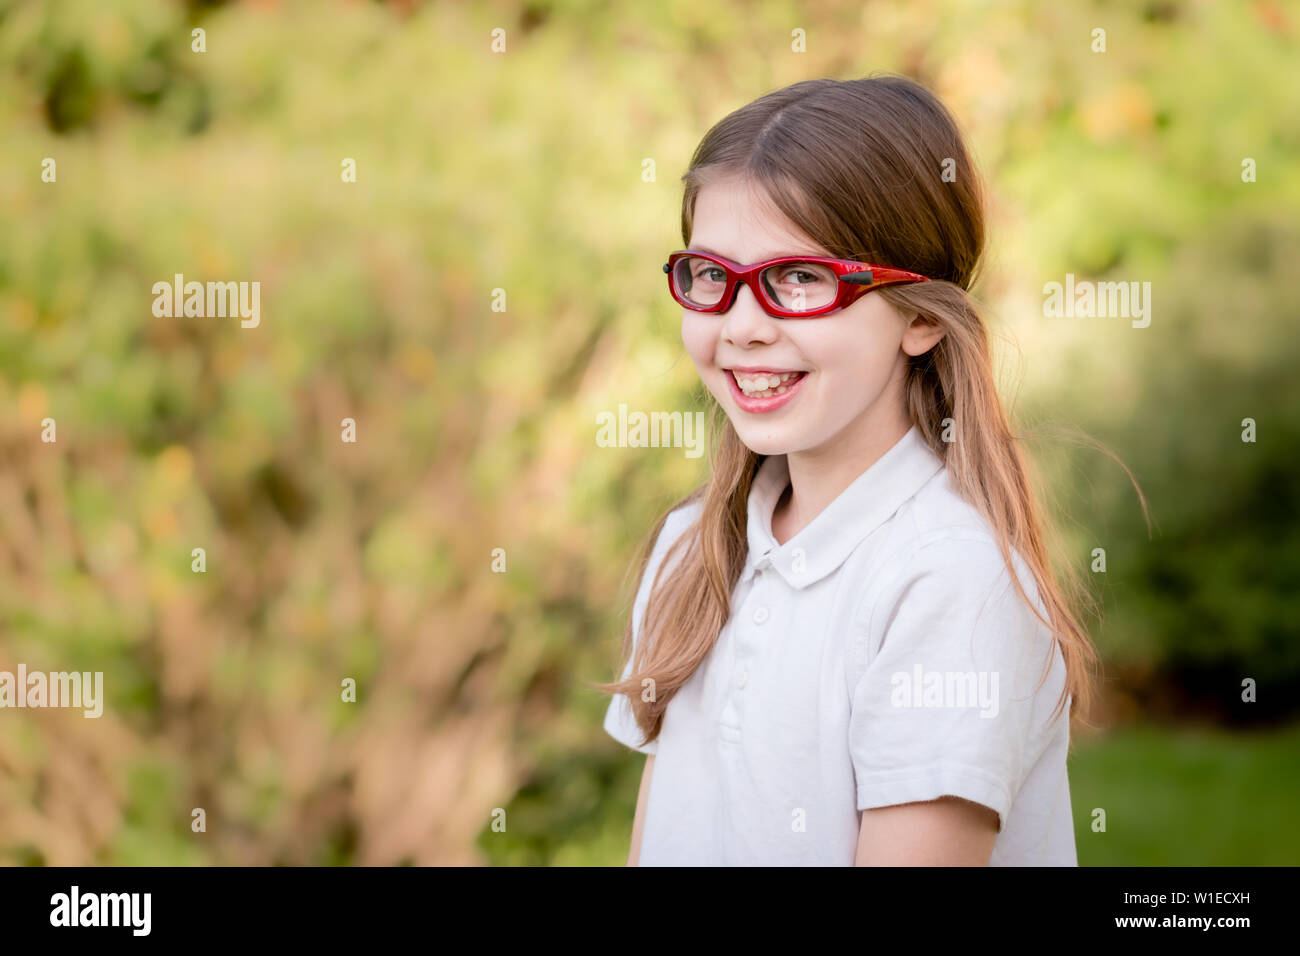 Lentes recetados fotografías e imágenes de alta resolución - Alamy